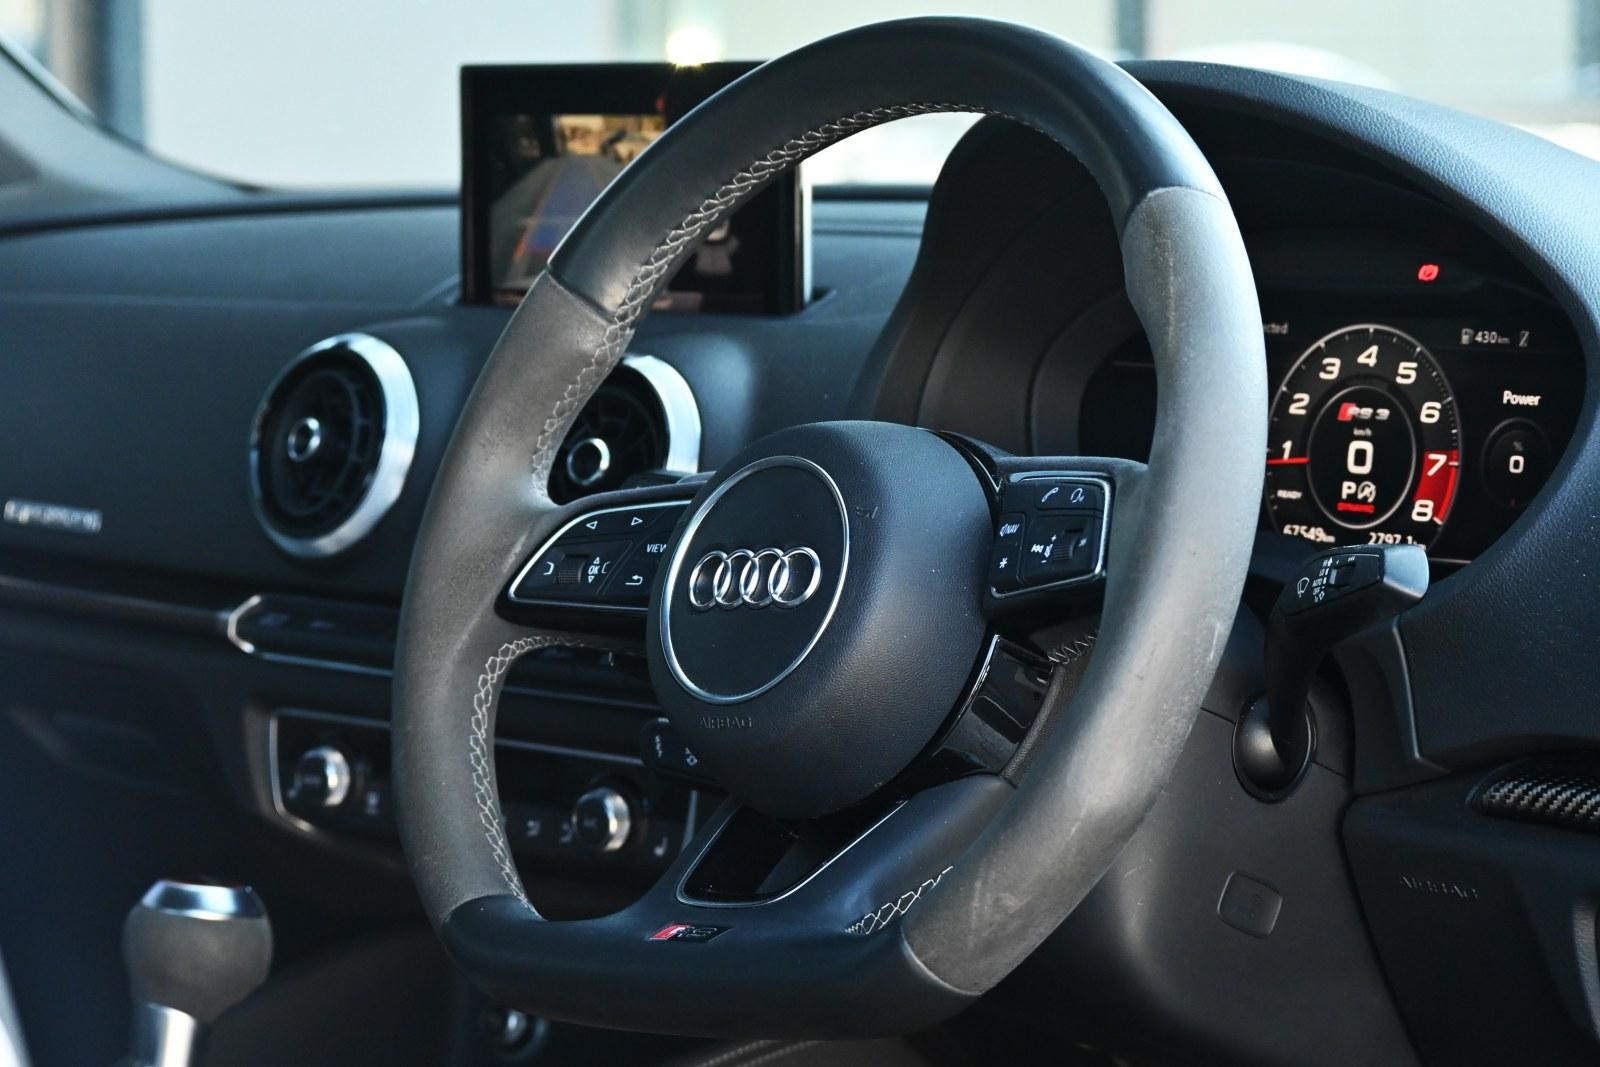 Audi Rs3 image 4